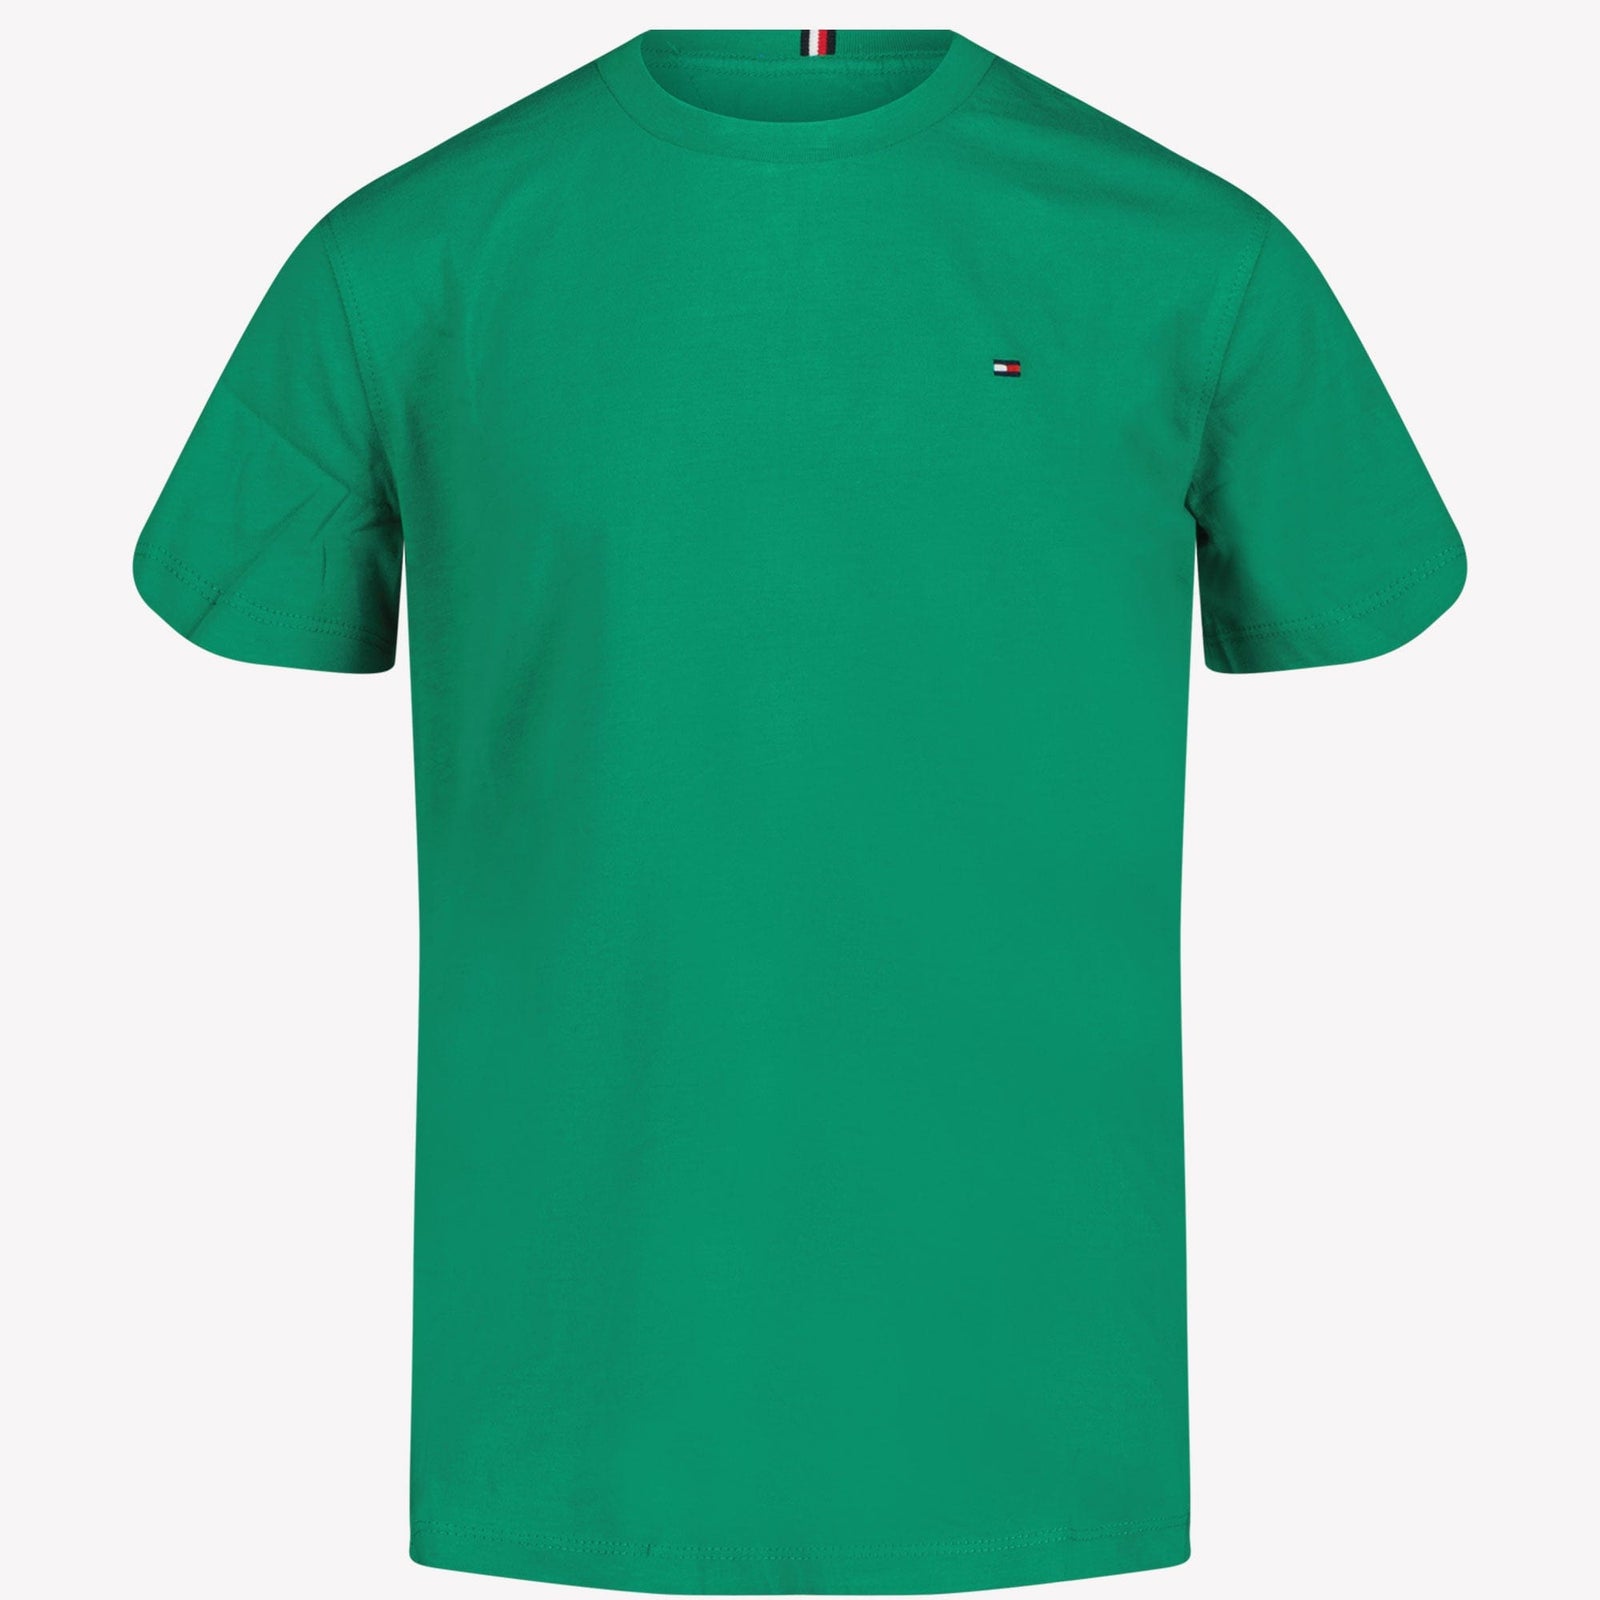 Tommy Hilfiger Kinder Jongens T-shirt Groen 4Y